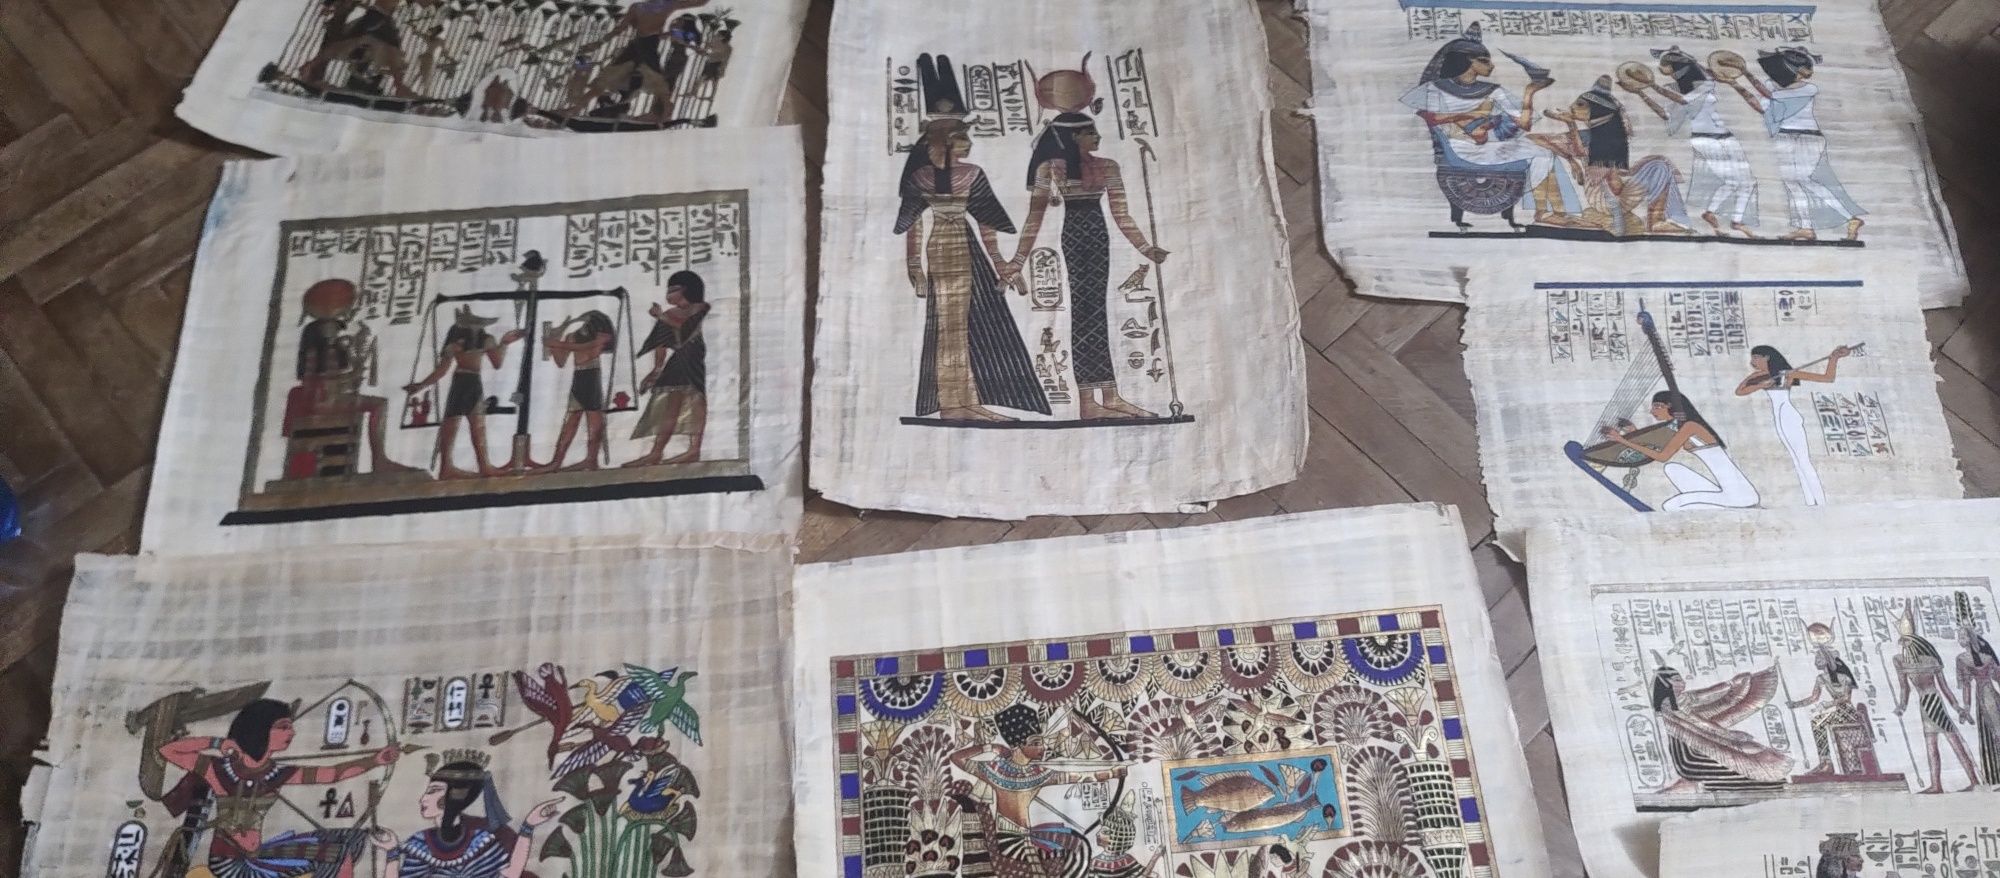 Papirus egiptean